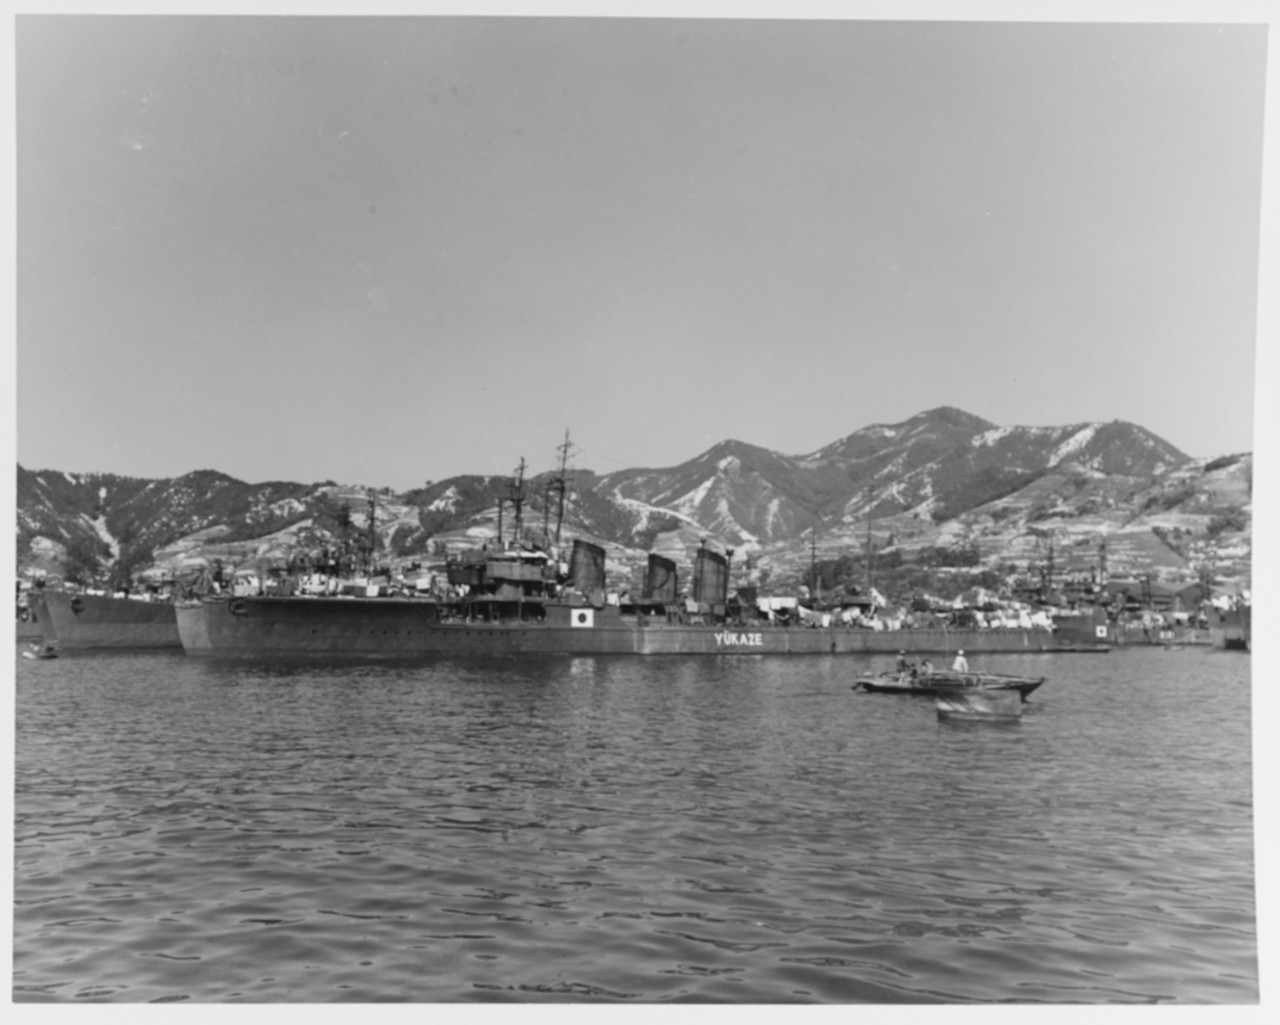 YUKAZE (Japanese destroyer, 1921)